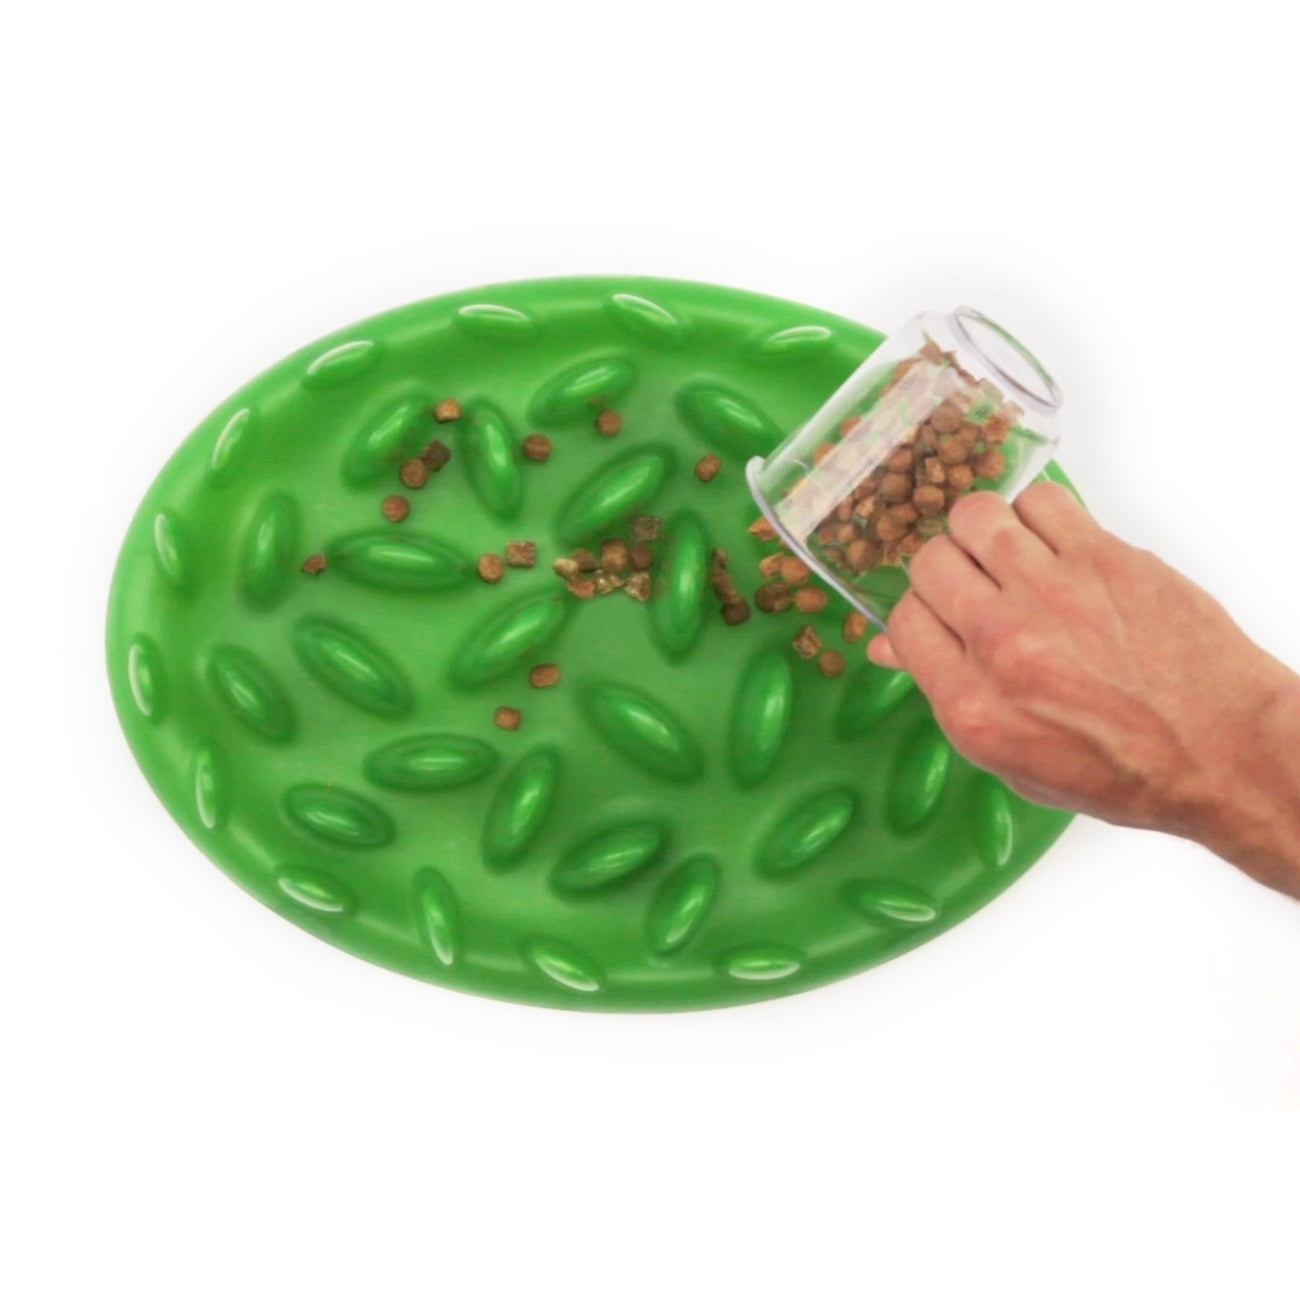 Northmate Green Interactive Slow Feeder  |  Interactive Slow Feeding Bowl